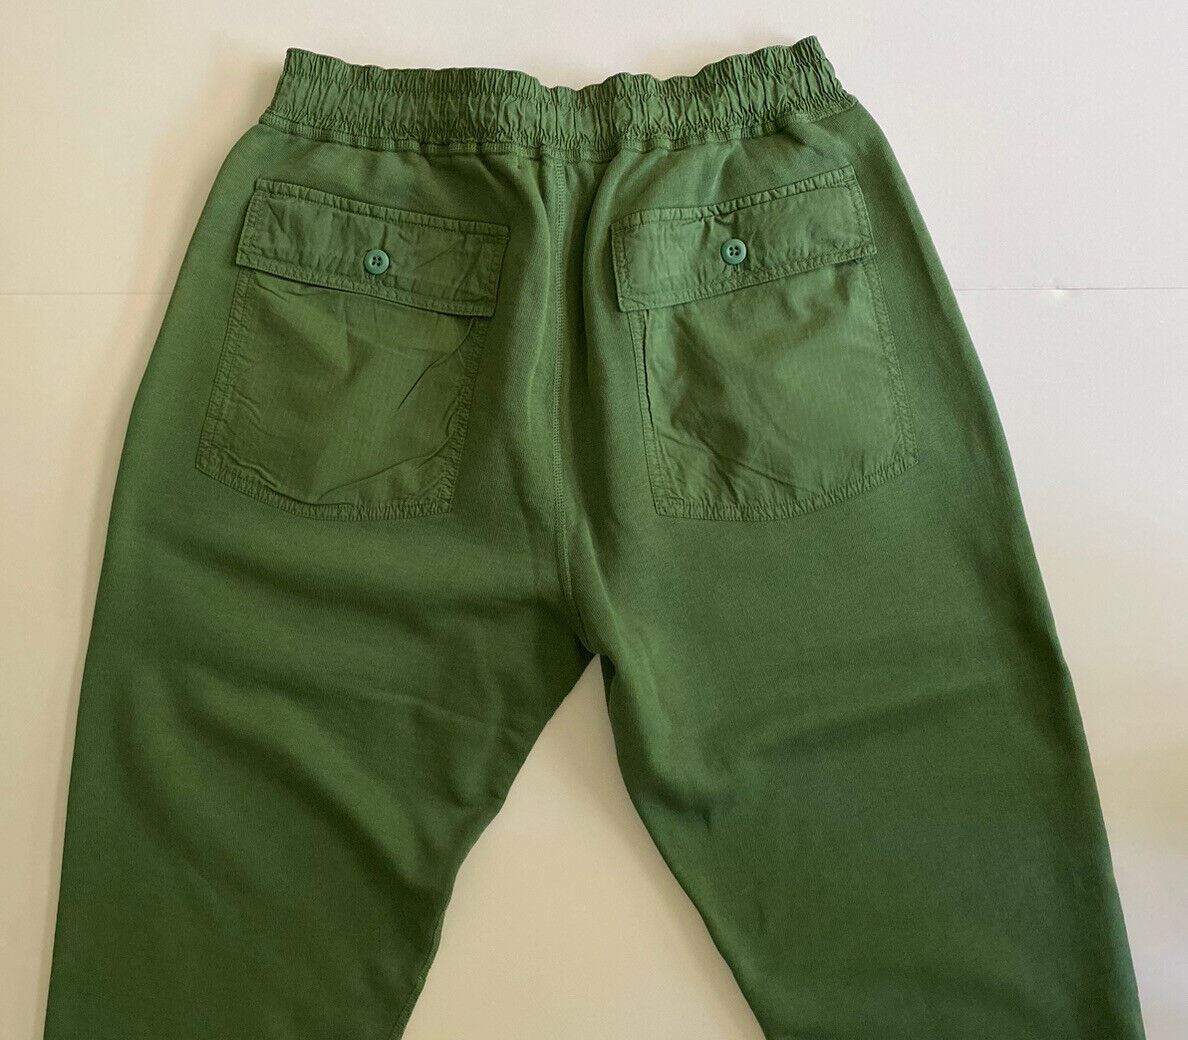 Neu mit Etikett: 168 $ Polo Ralph Lauren Herren-Freizeithose „Modern Green“ XL